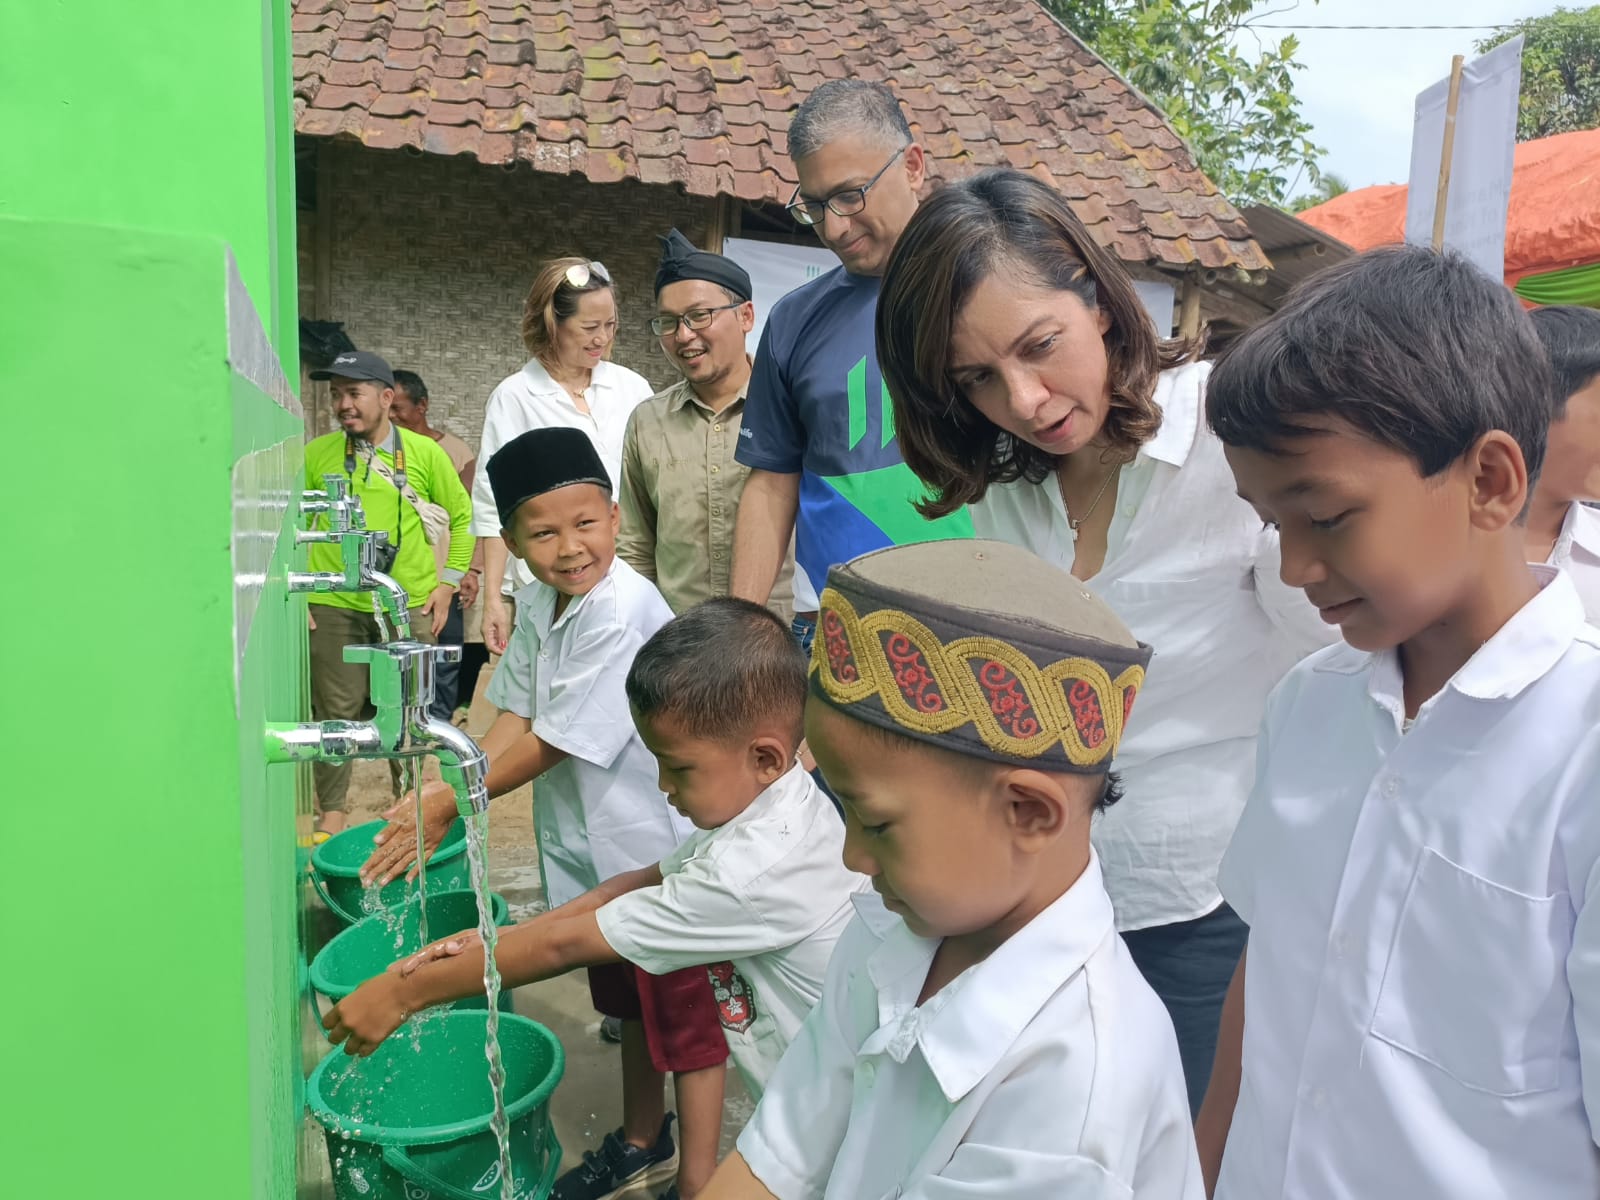 Manulife Awali Tahun 2023 dengan Berbuat Baik, Bangun Sarana Air Bersih di Pandeglang